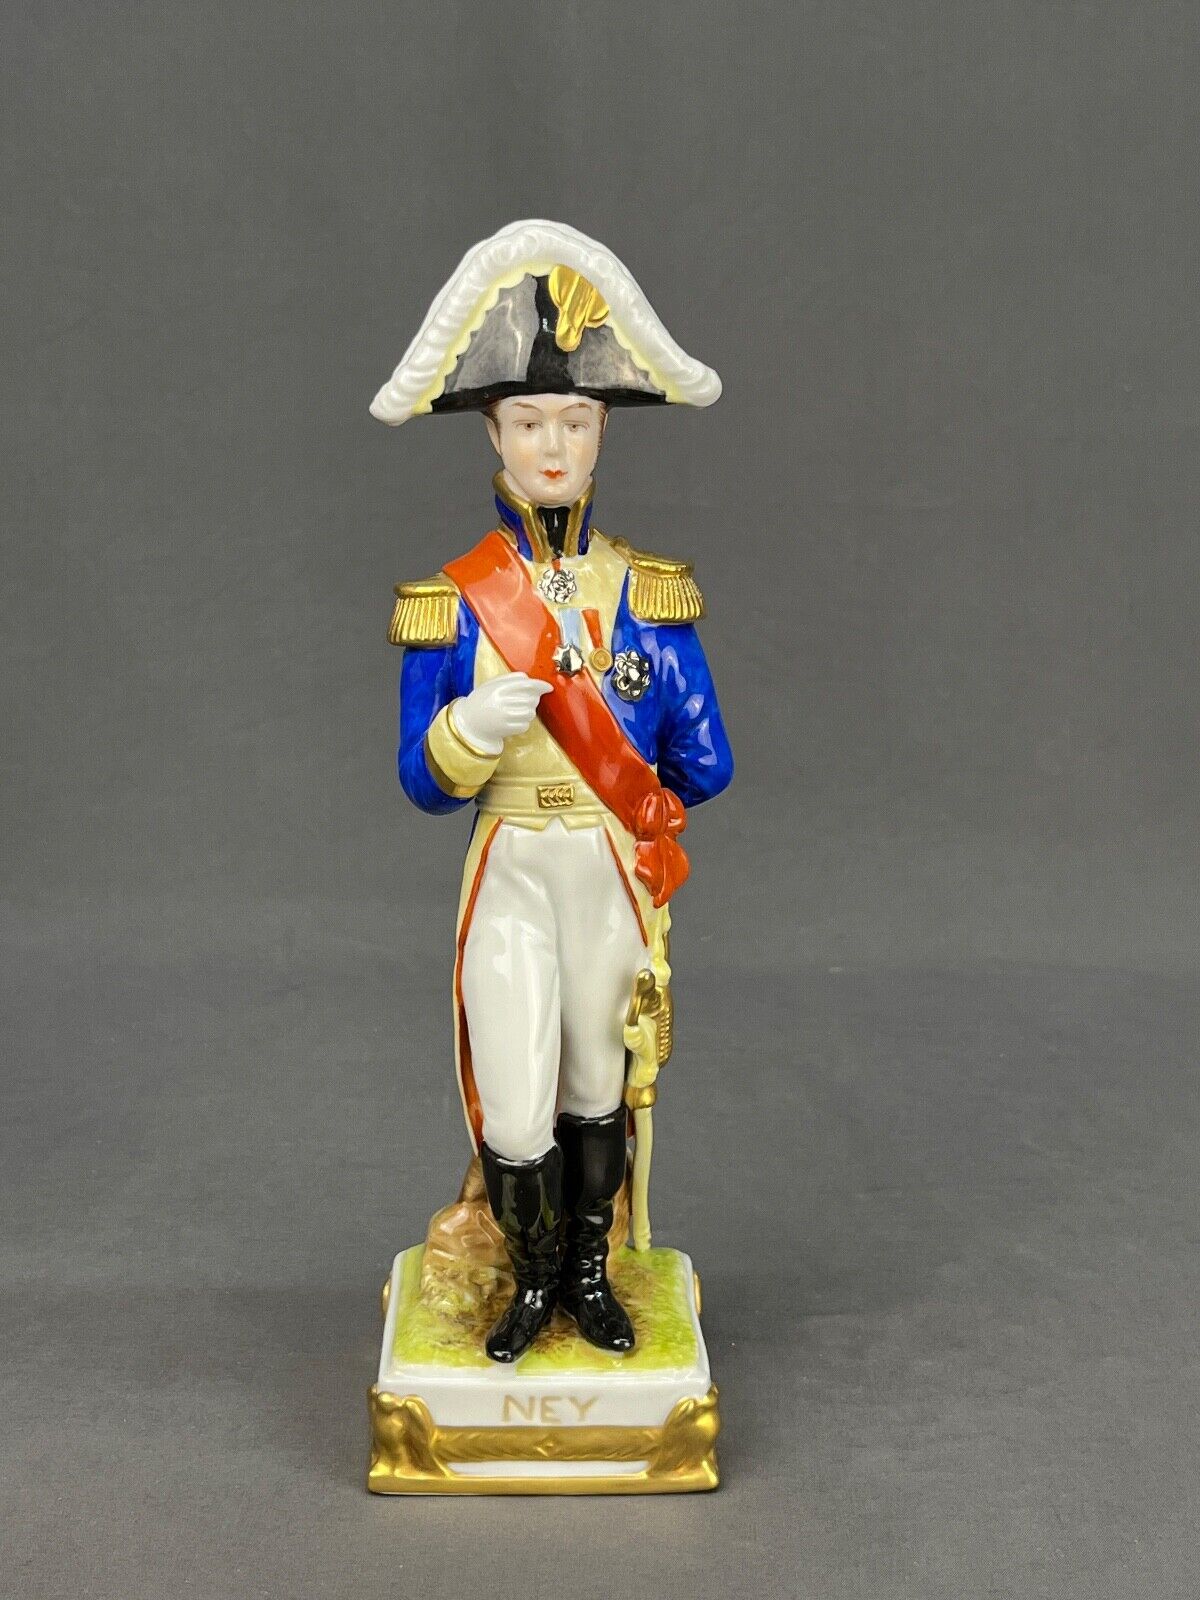 Scheibe-Alsbach Kister German Porcelain GENERAL NEY Napoleonic Statue Figurine